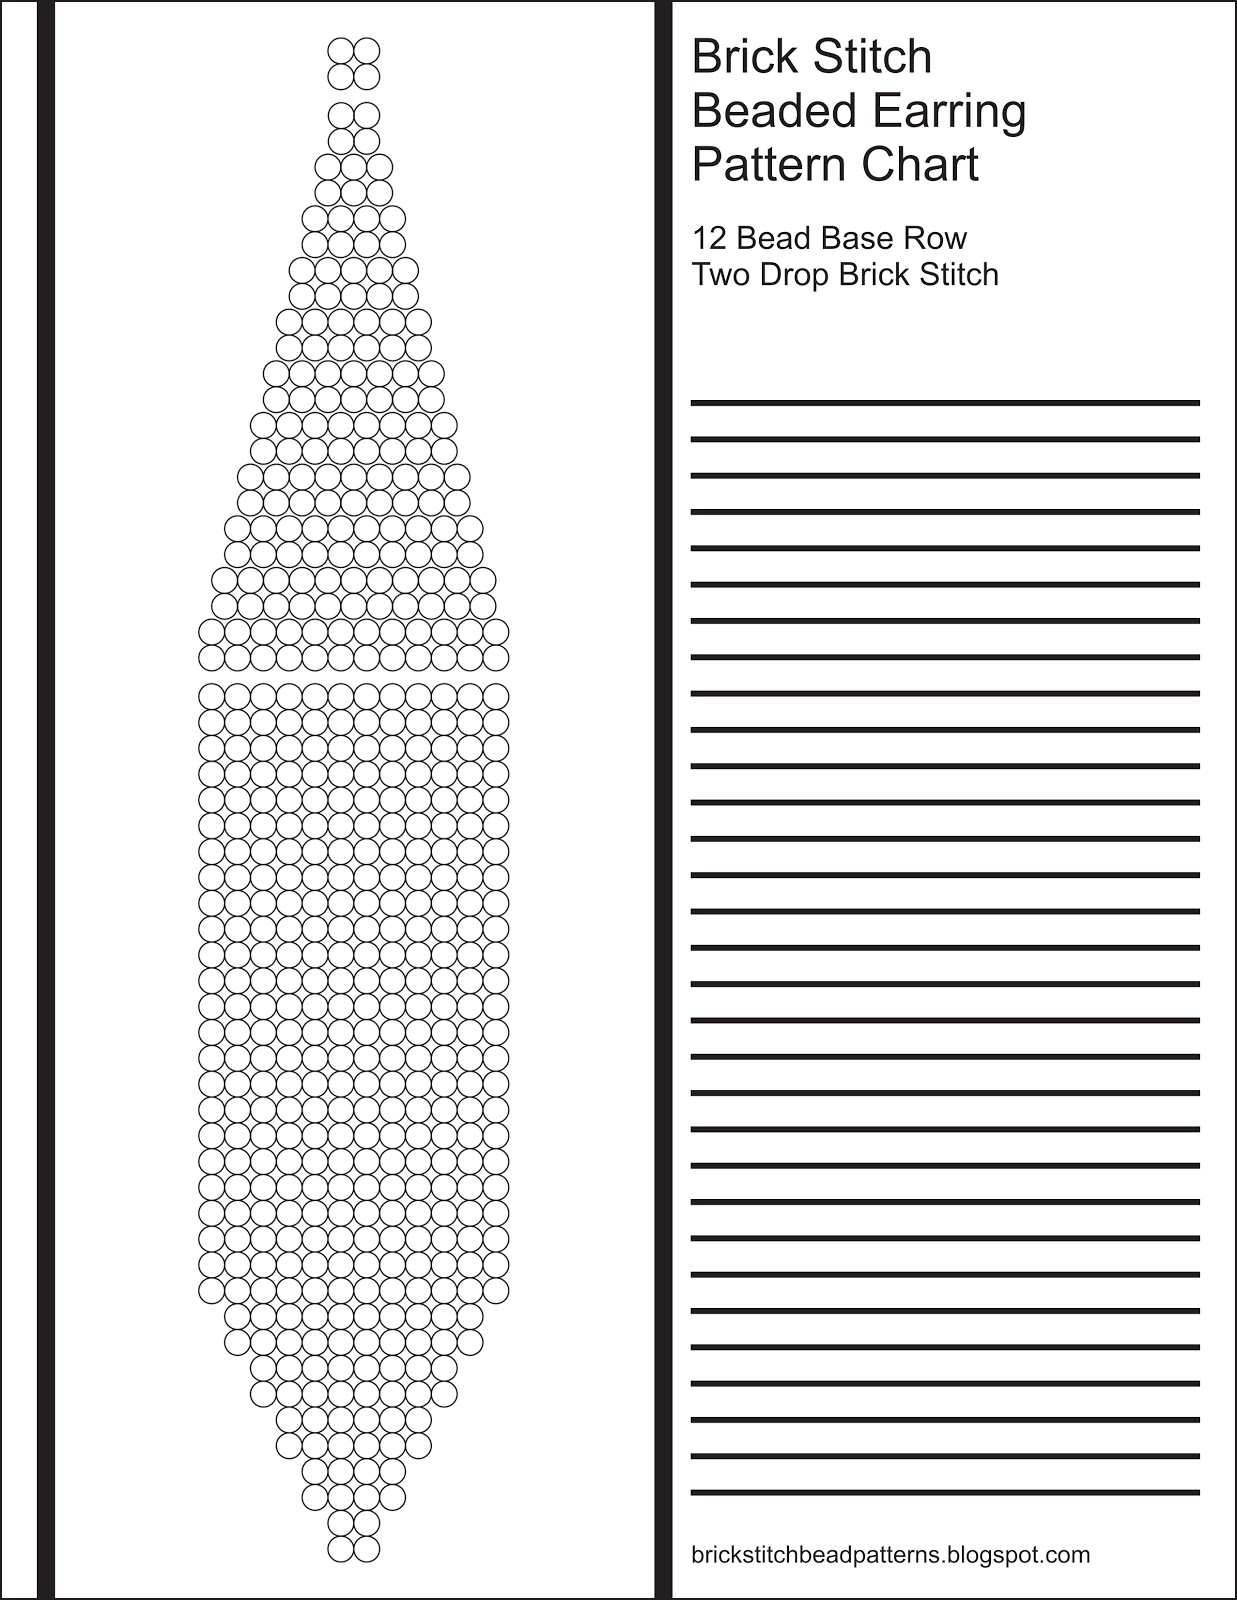 brick-stitch-bead-patterns-journal-12-bead-base-row-2-drop-blank-round